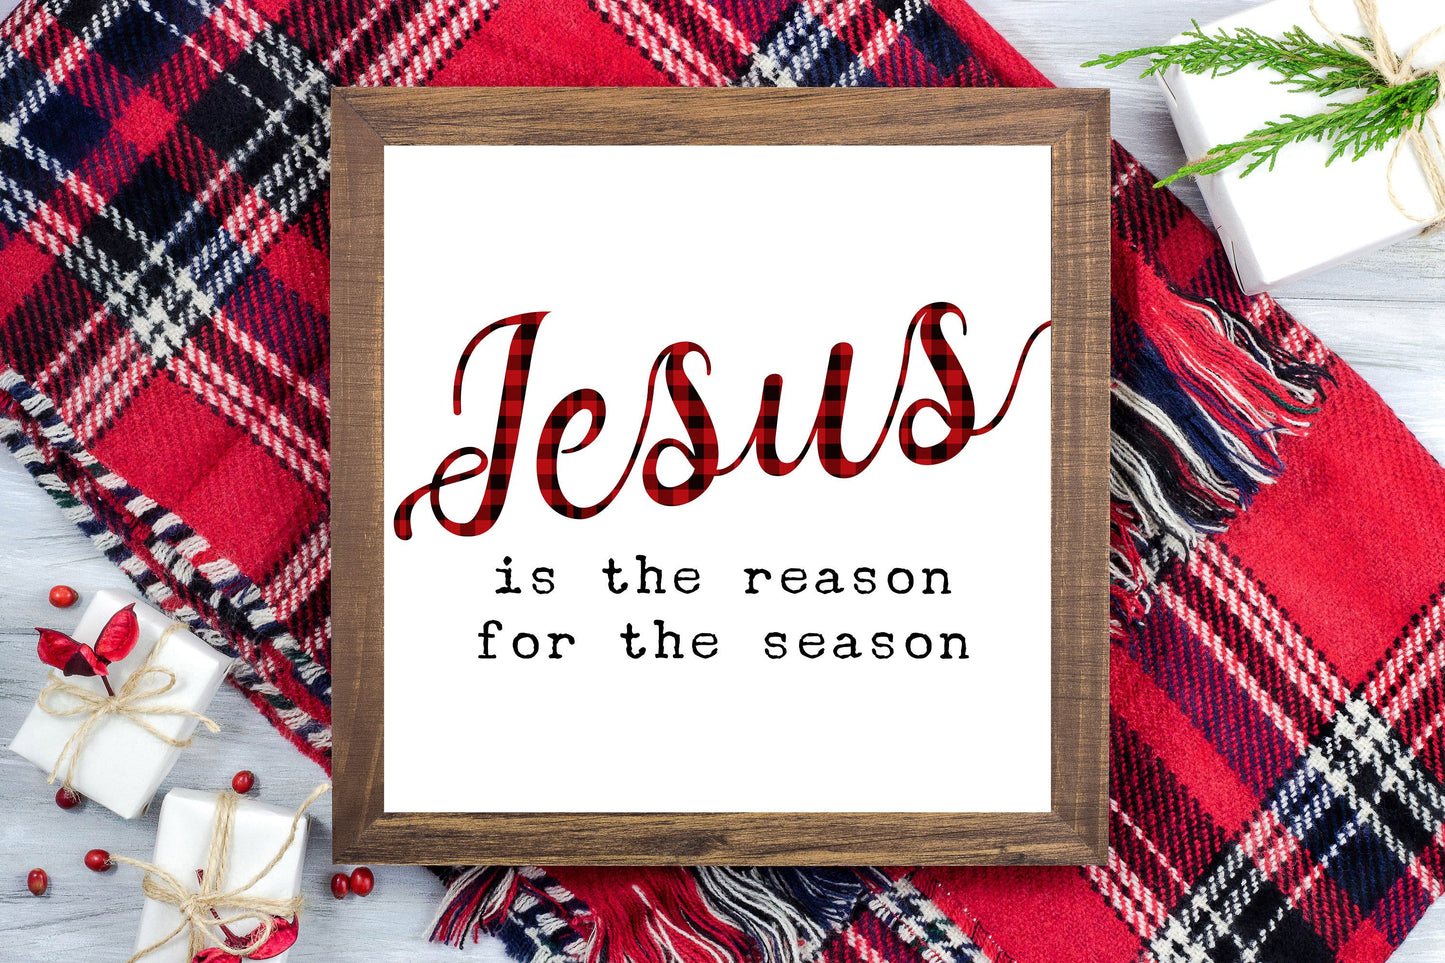 Jesus is the reason for the season - Christian Christmas Decor Printable Sign Farmhouse Style  - Digital File